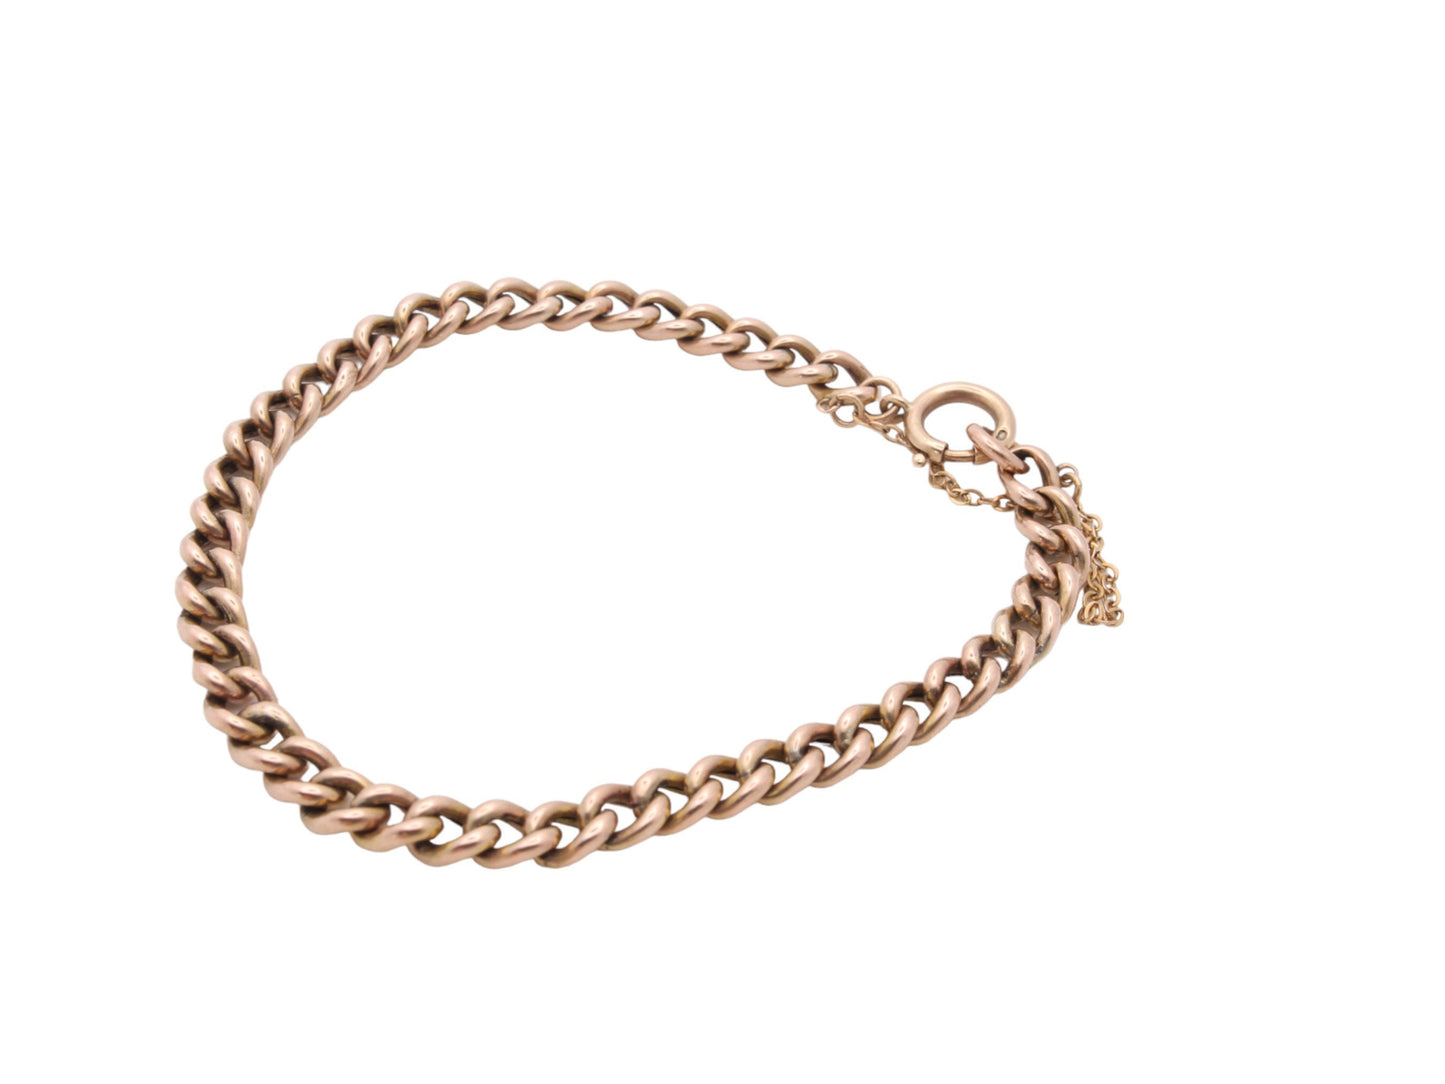 Antique 9ct Gold Curb Link Bracelet 7"